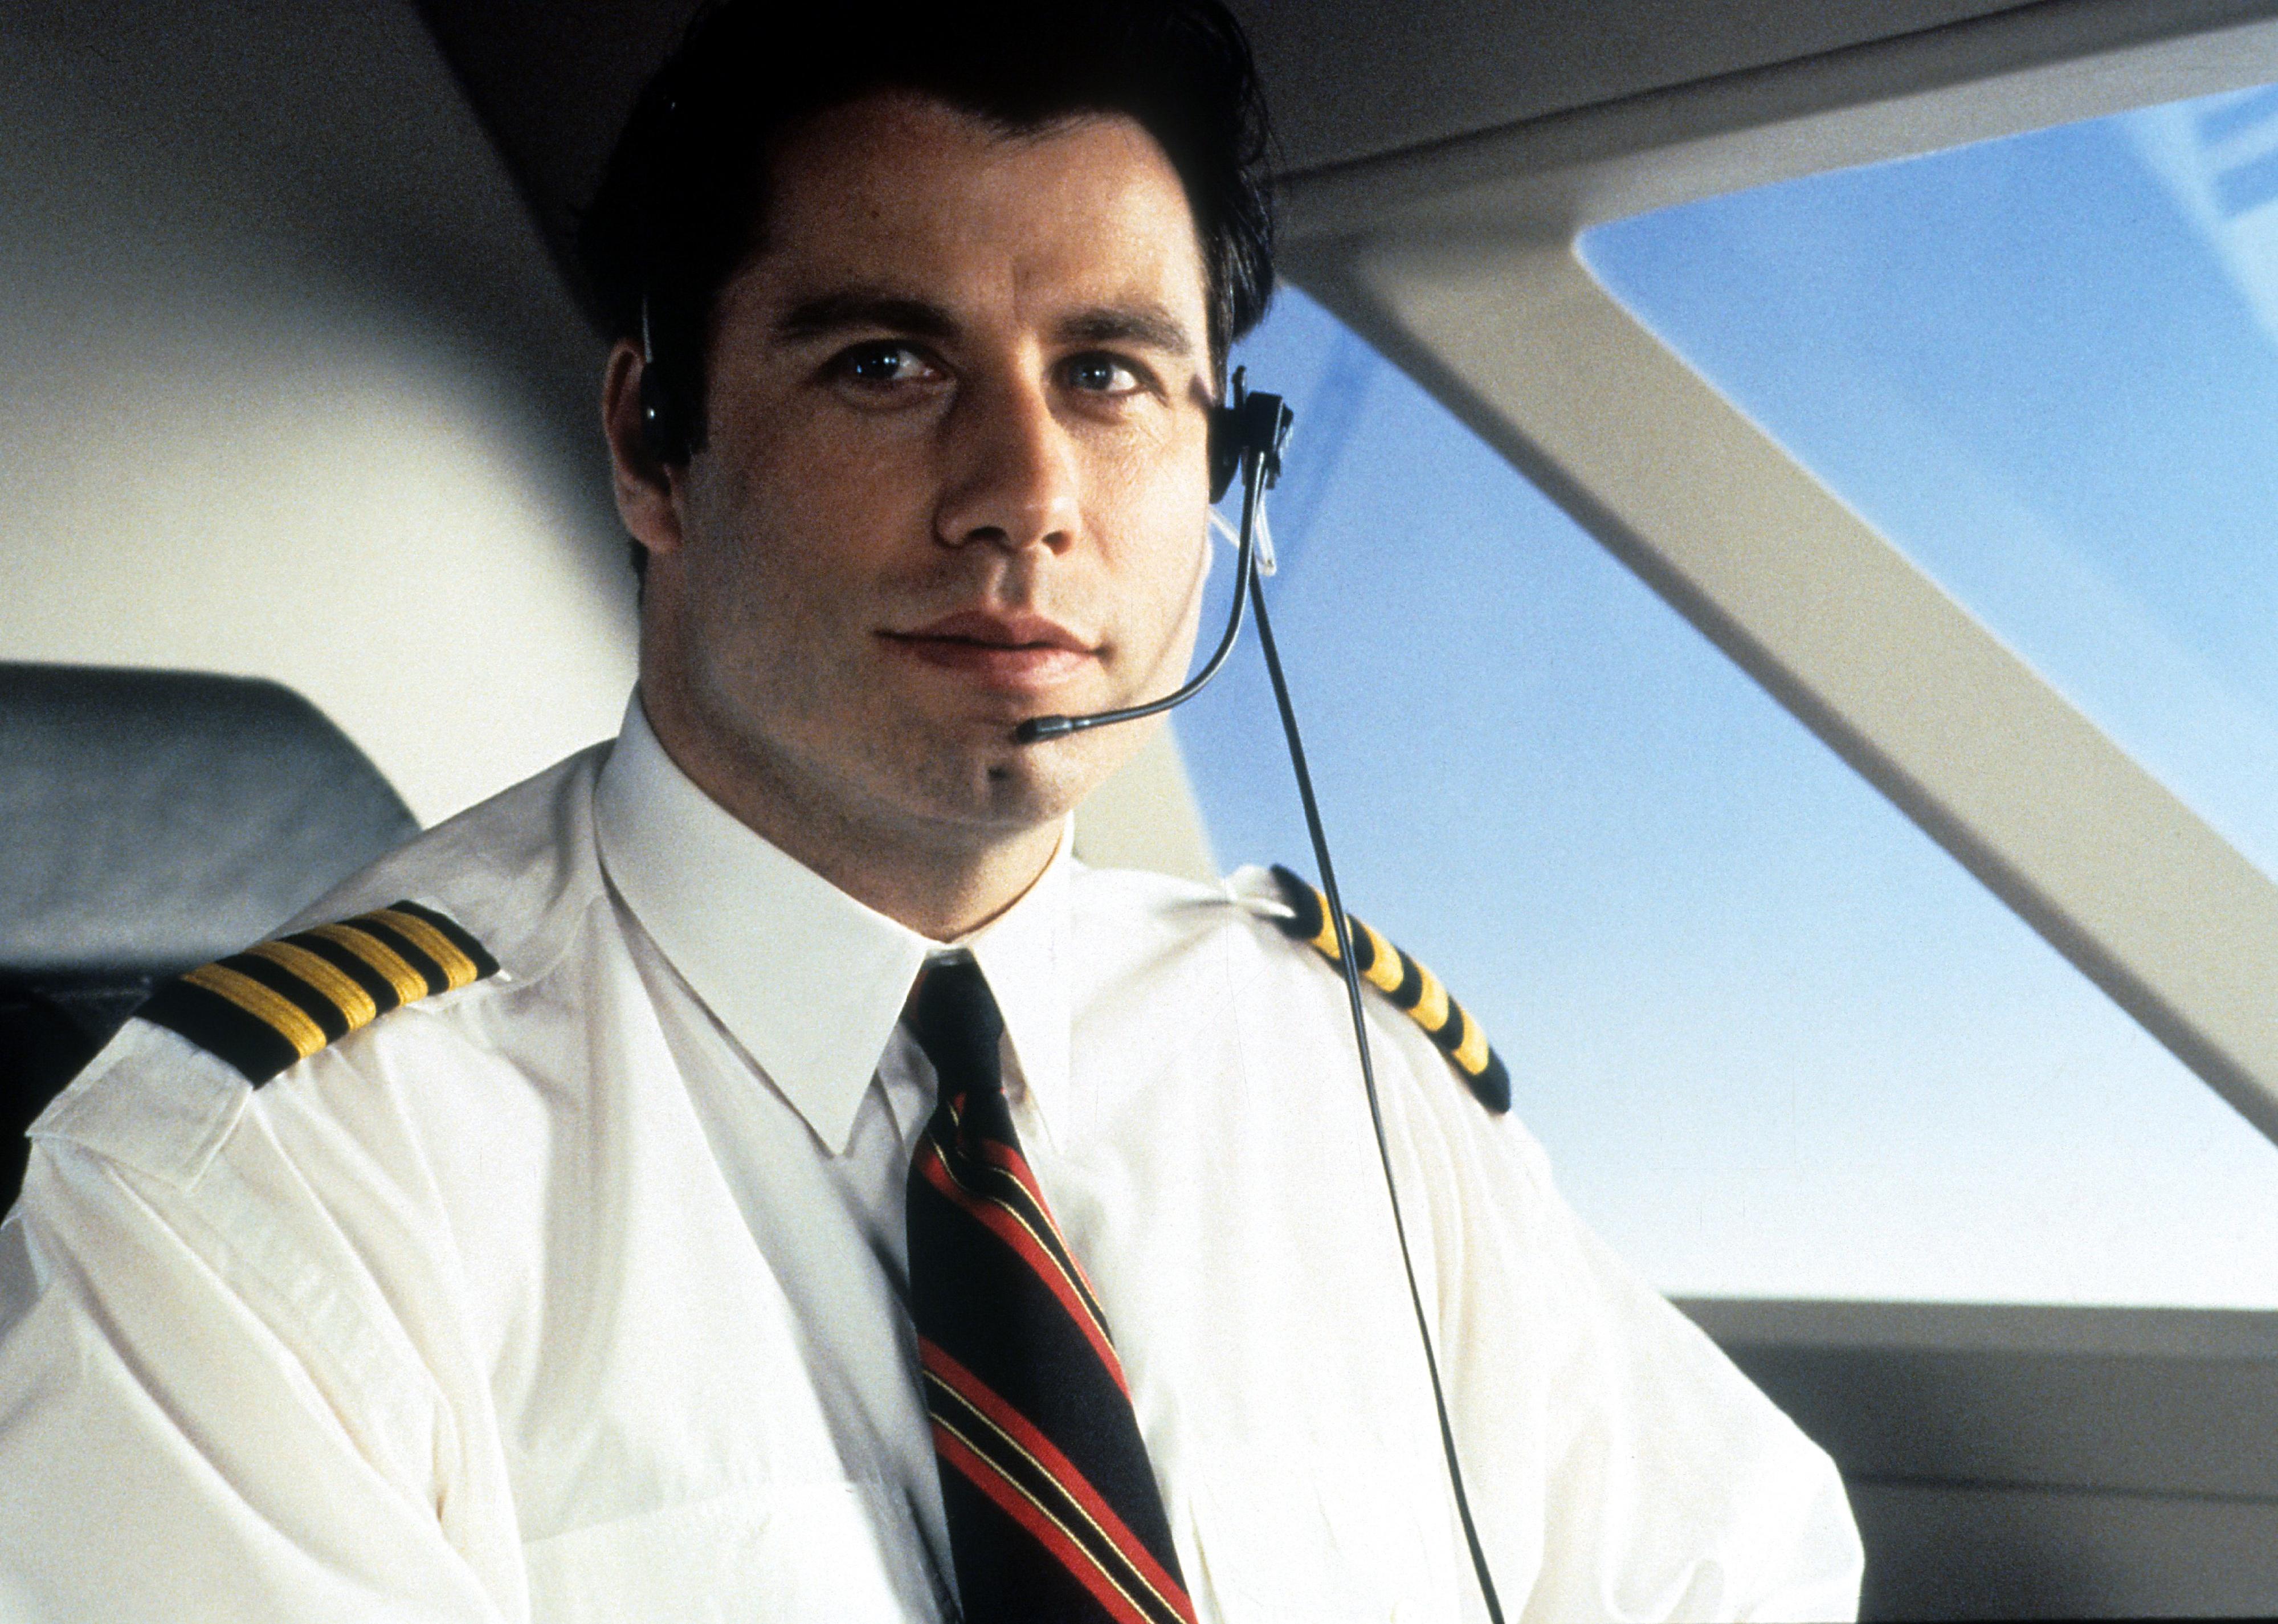 John Travolta dressed as a pilot flying an airplane.